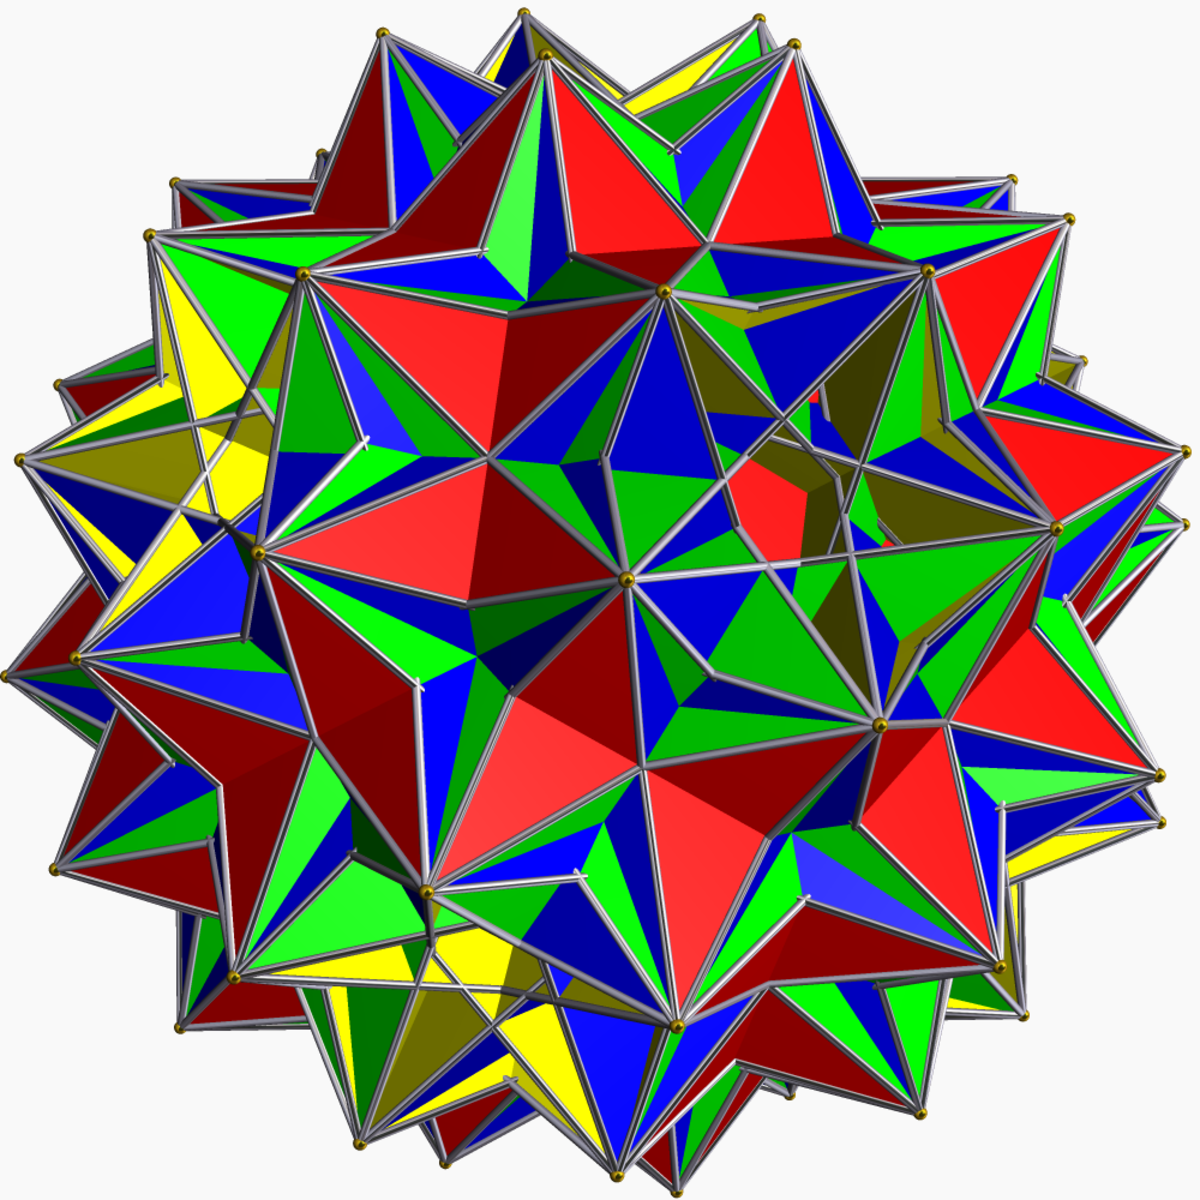 Great disnub dirhombidodecahedron.png